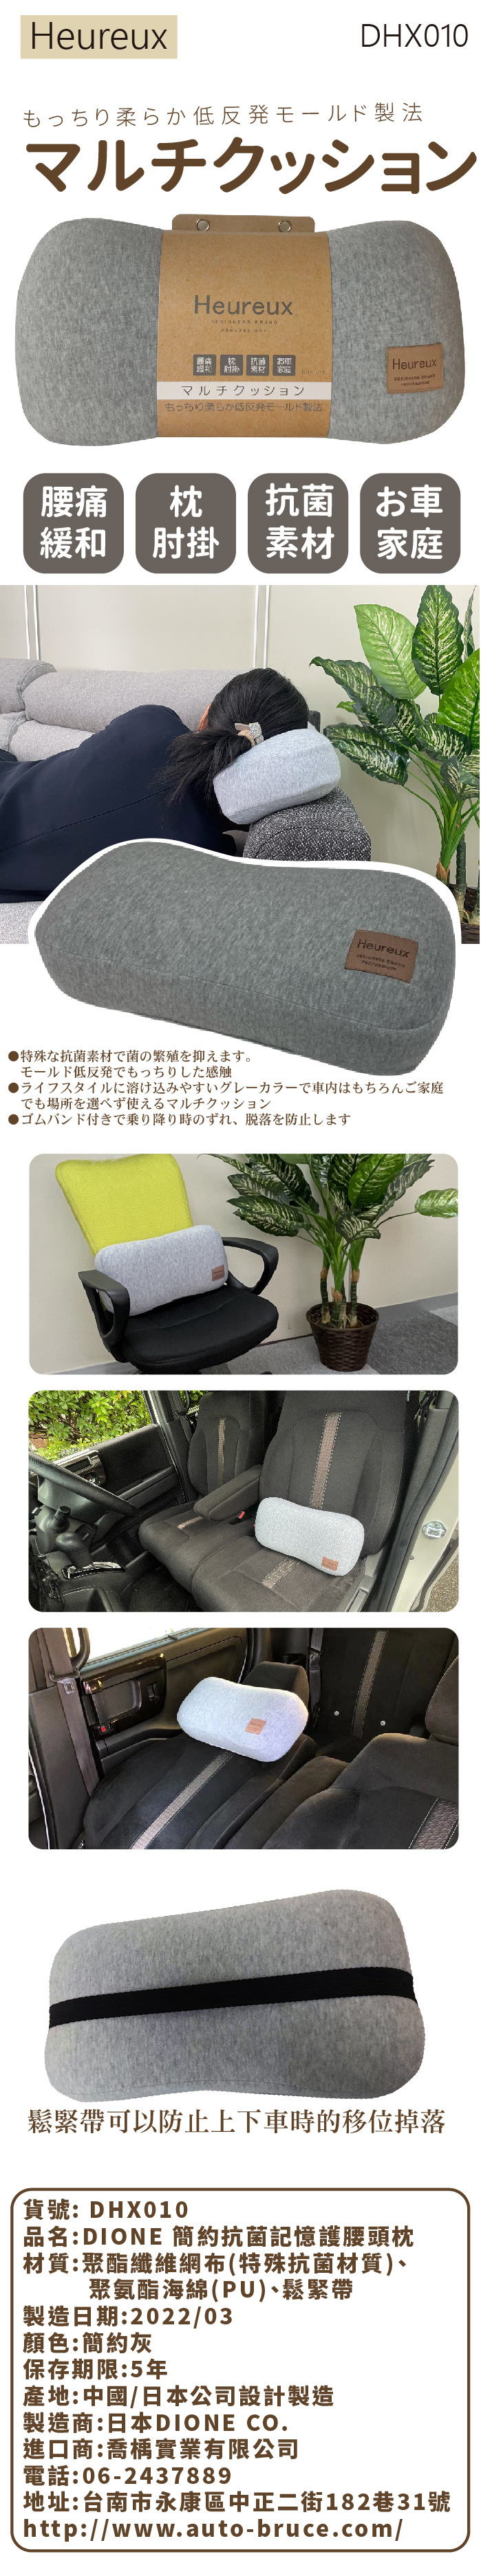 DHX010-DIONE 簡約抗菌護腰頭枕-01